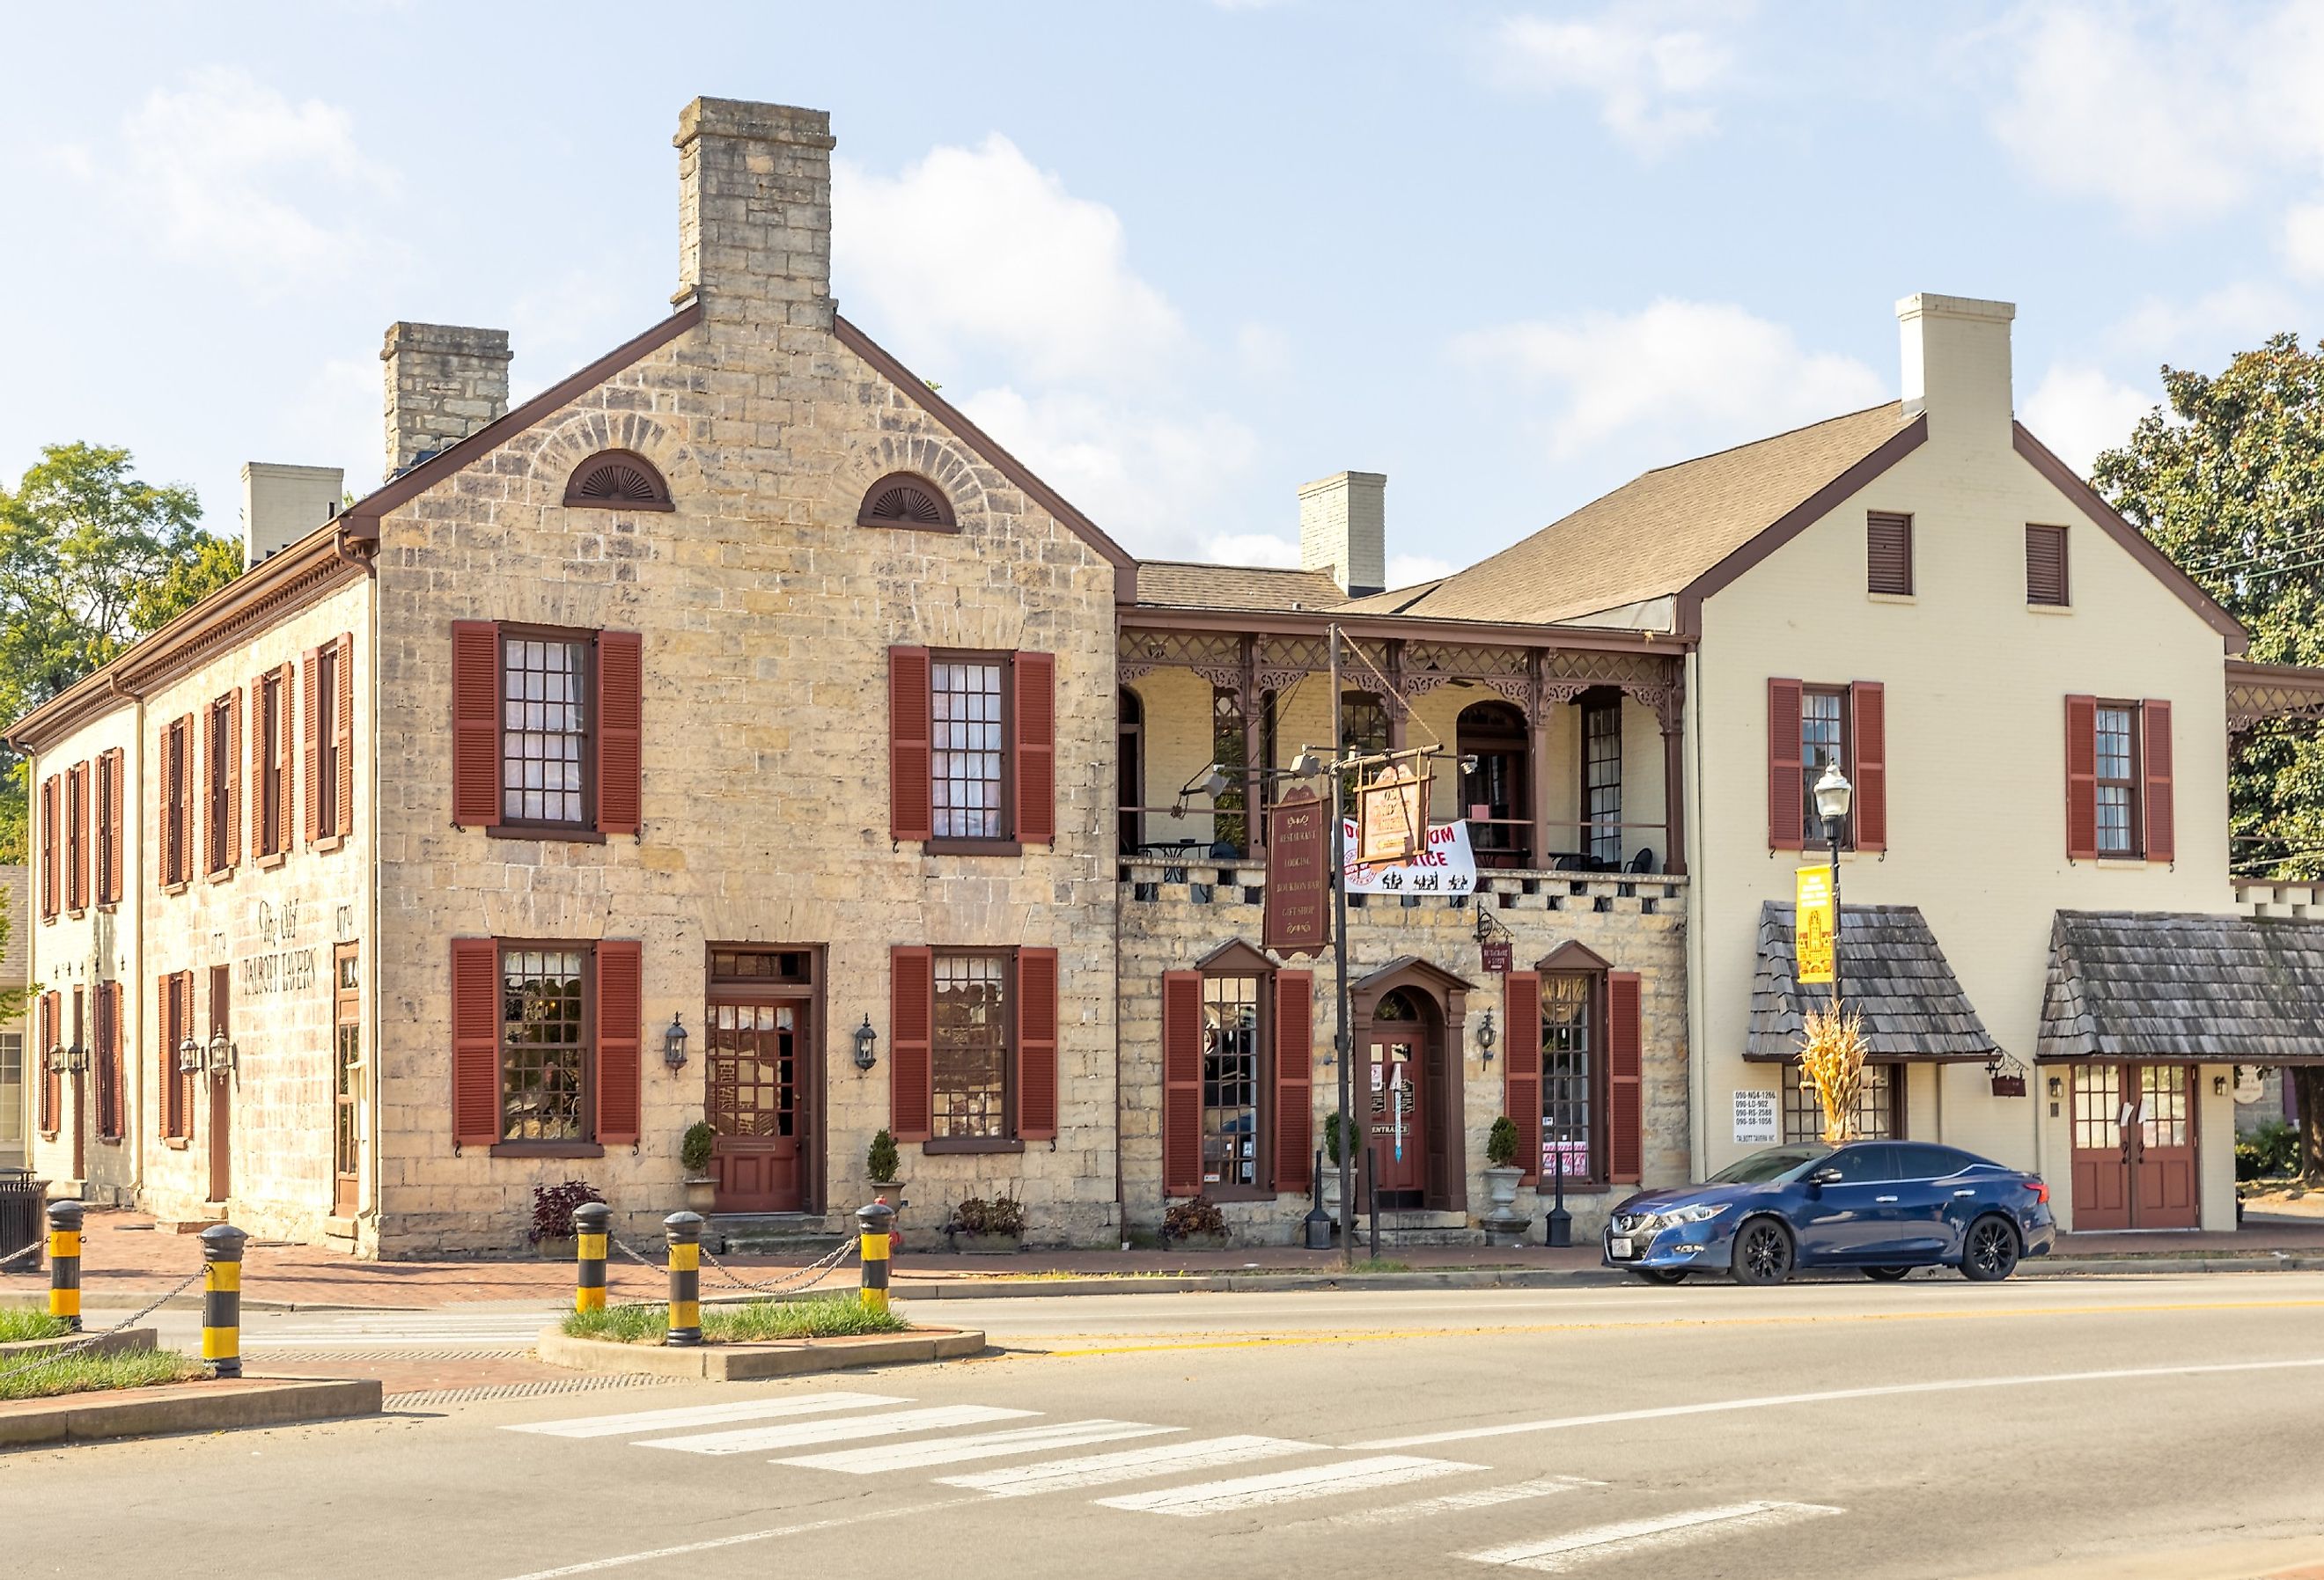 The Old Talbott Tavern in Bardstown, Kentucky. Image credit Ryan_hoel via Shutterstock